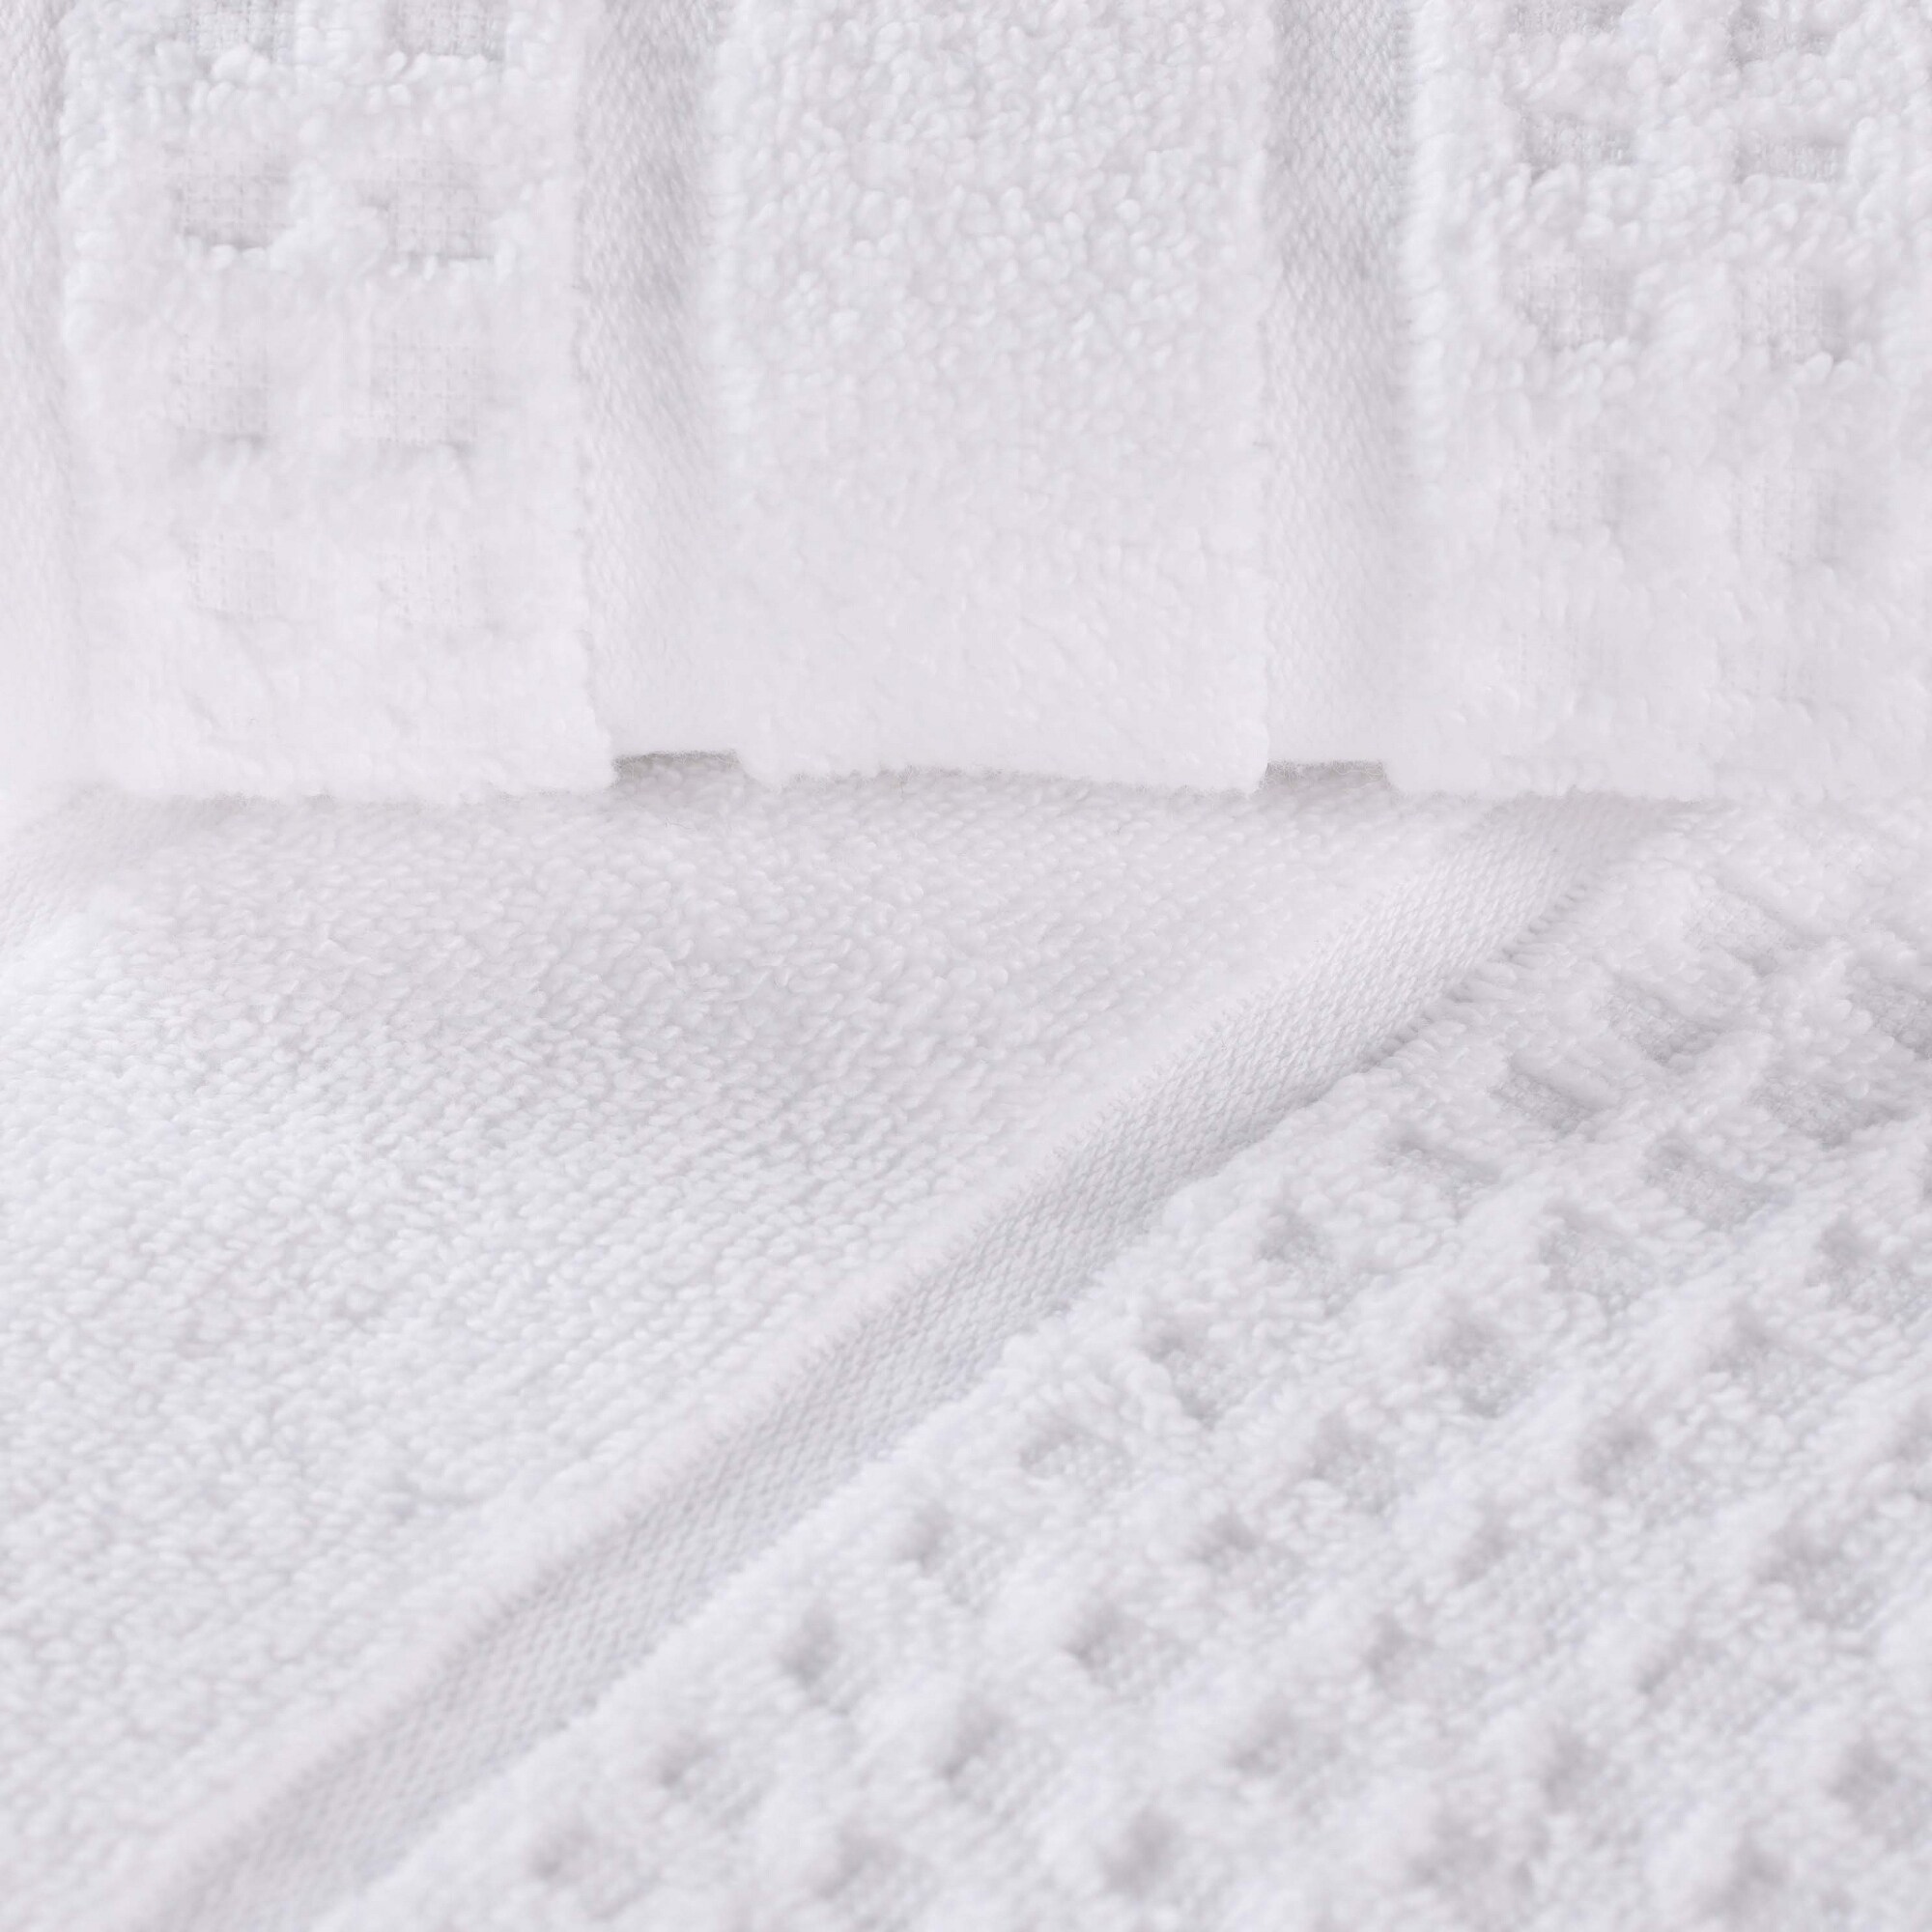 Superior Napa Zero Twist Cotton Waffle Face Towel Washcloth Set of 12 - Forest Green